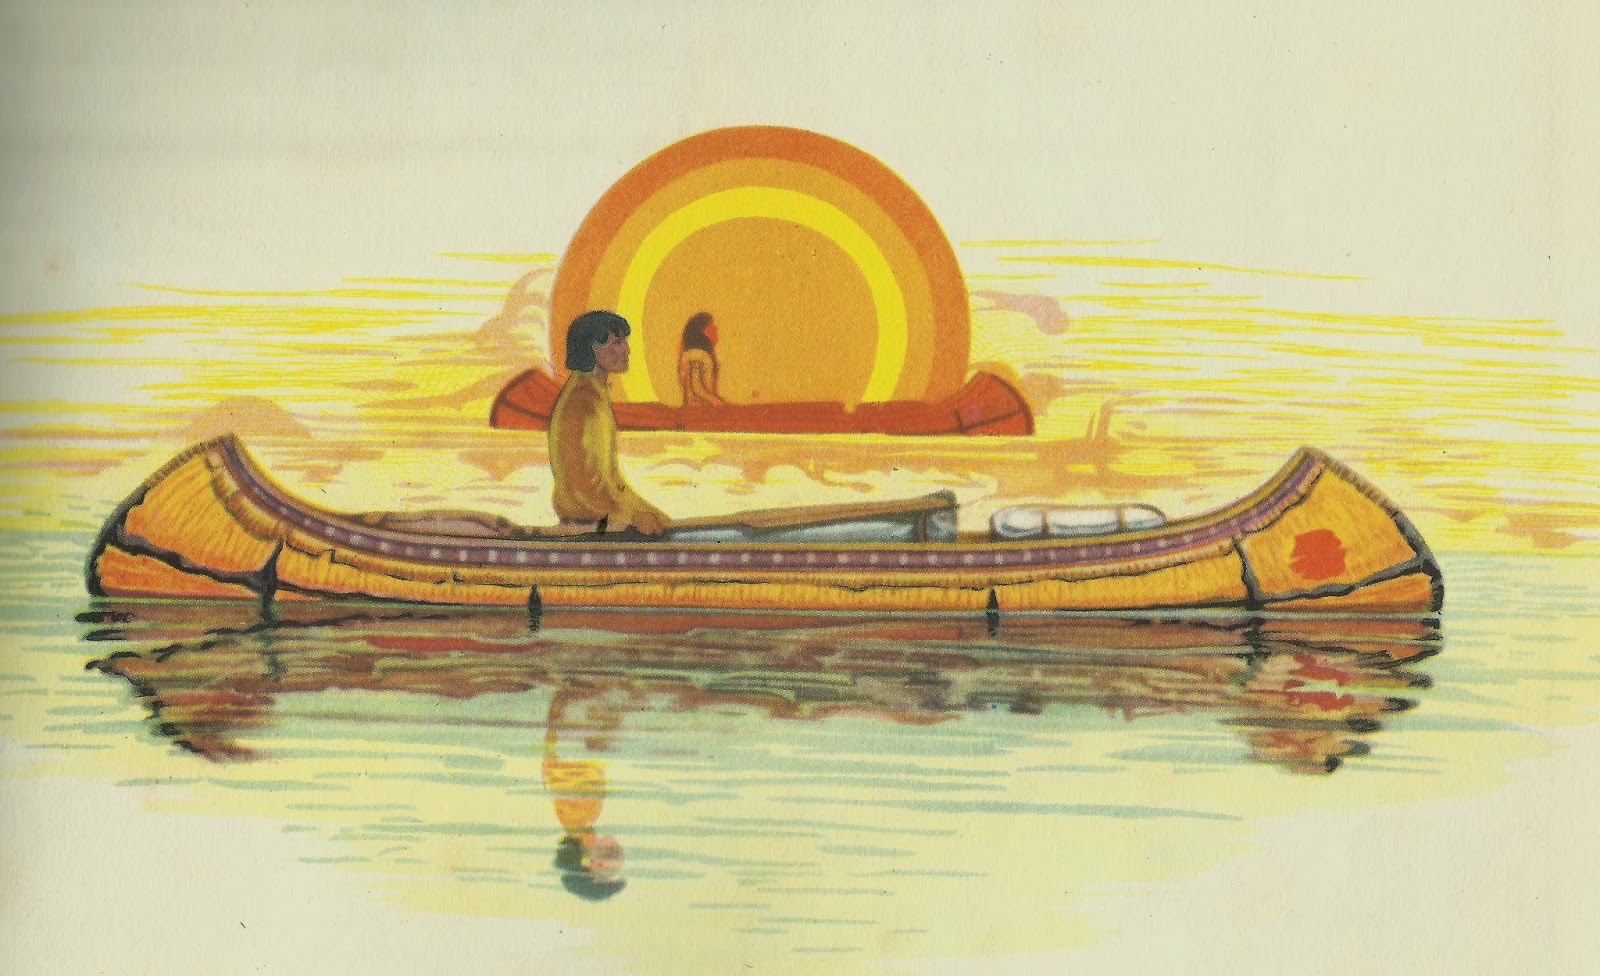 Harmen Hielkema's Canoes of Oceania: Paddle to the Sea.